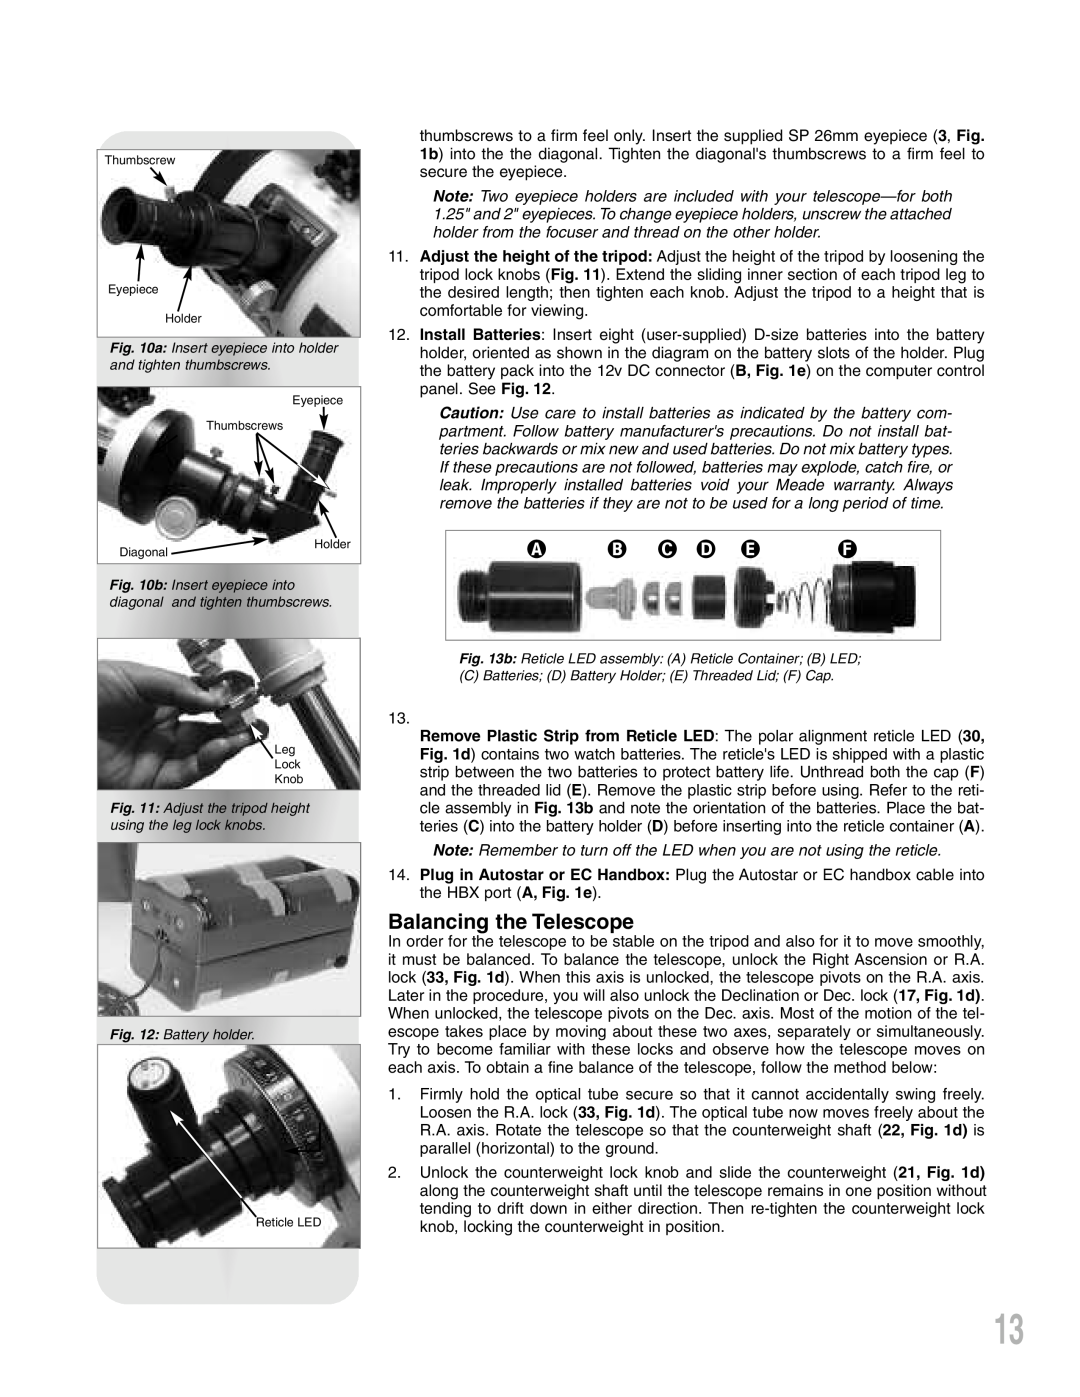 Meade LXD 75-Series instruction manual A B C D E F, Balancing the Telescope 